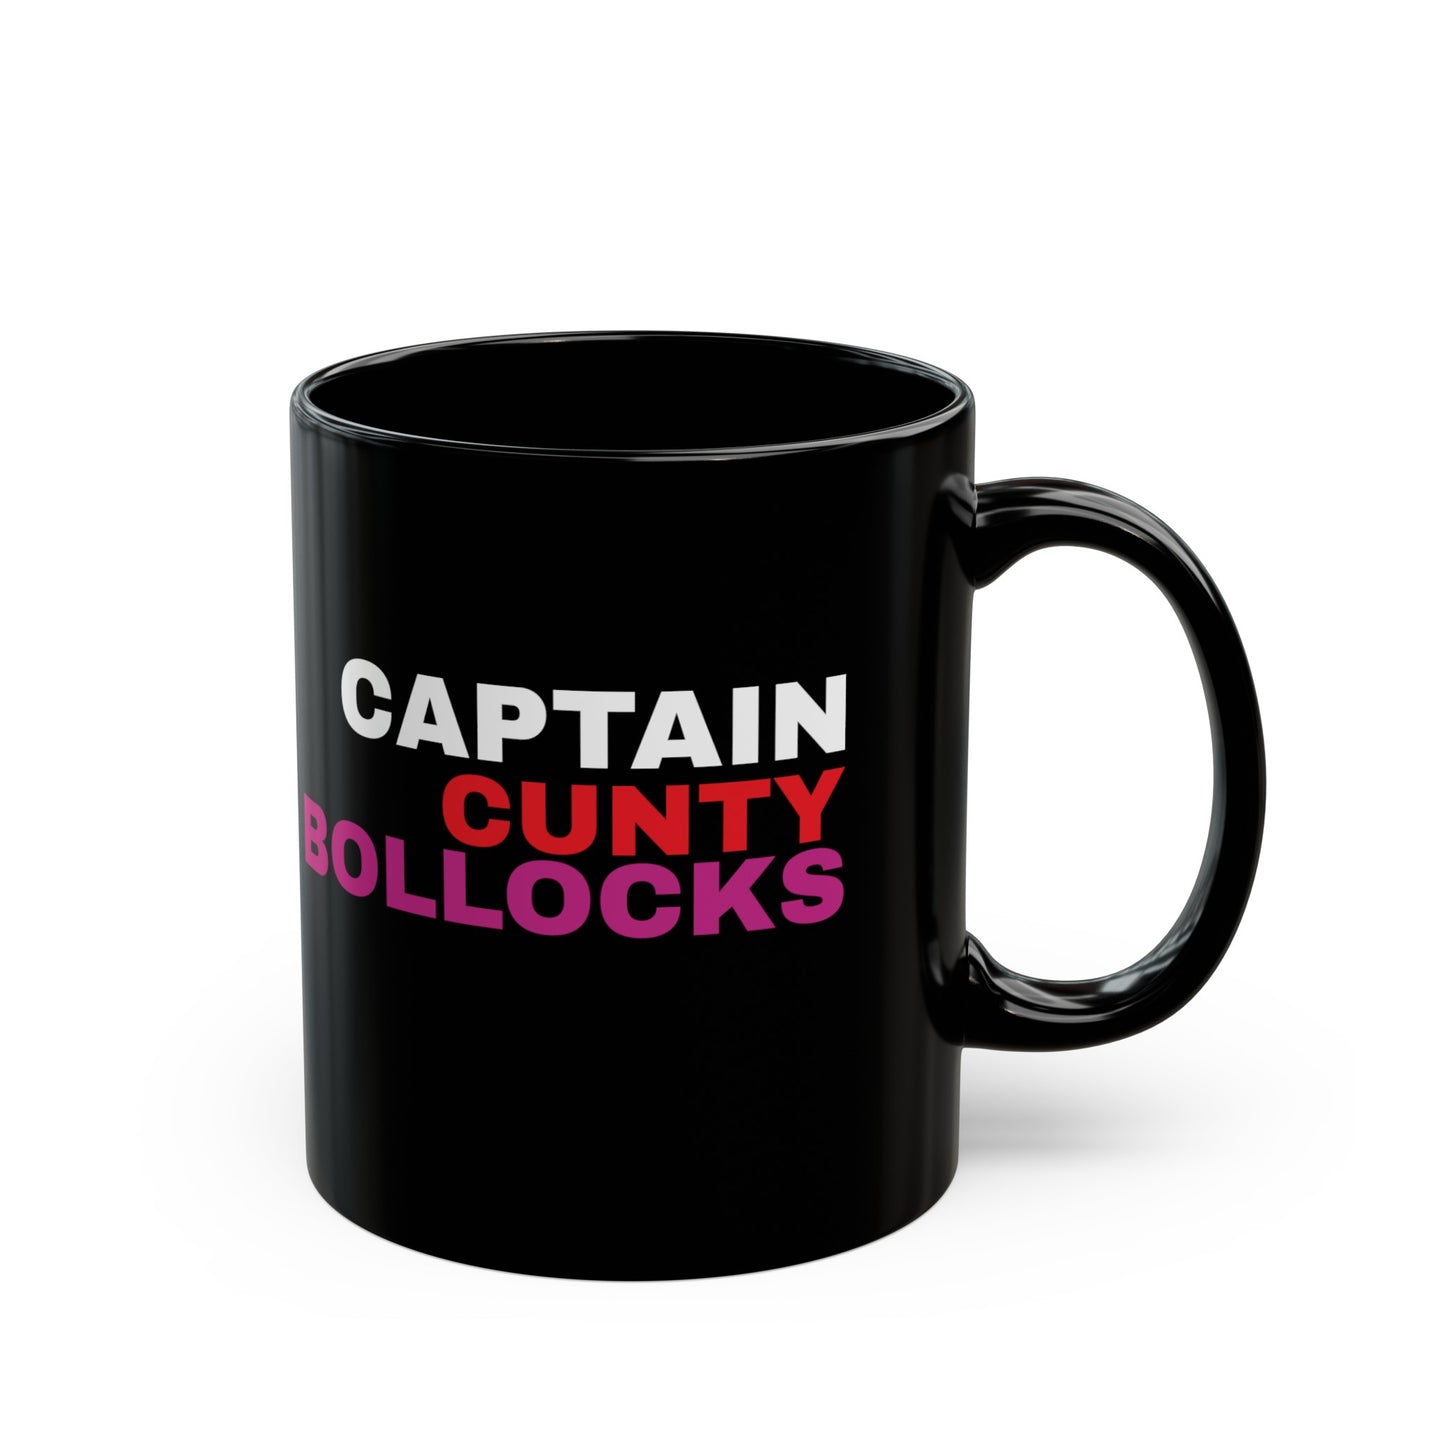 CAPTAIN CUNTY BOLLOCKS - Black Mug (11oz)